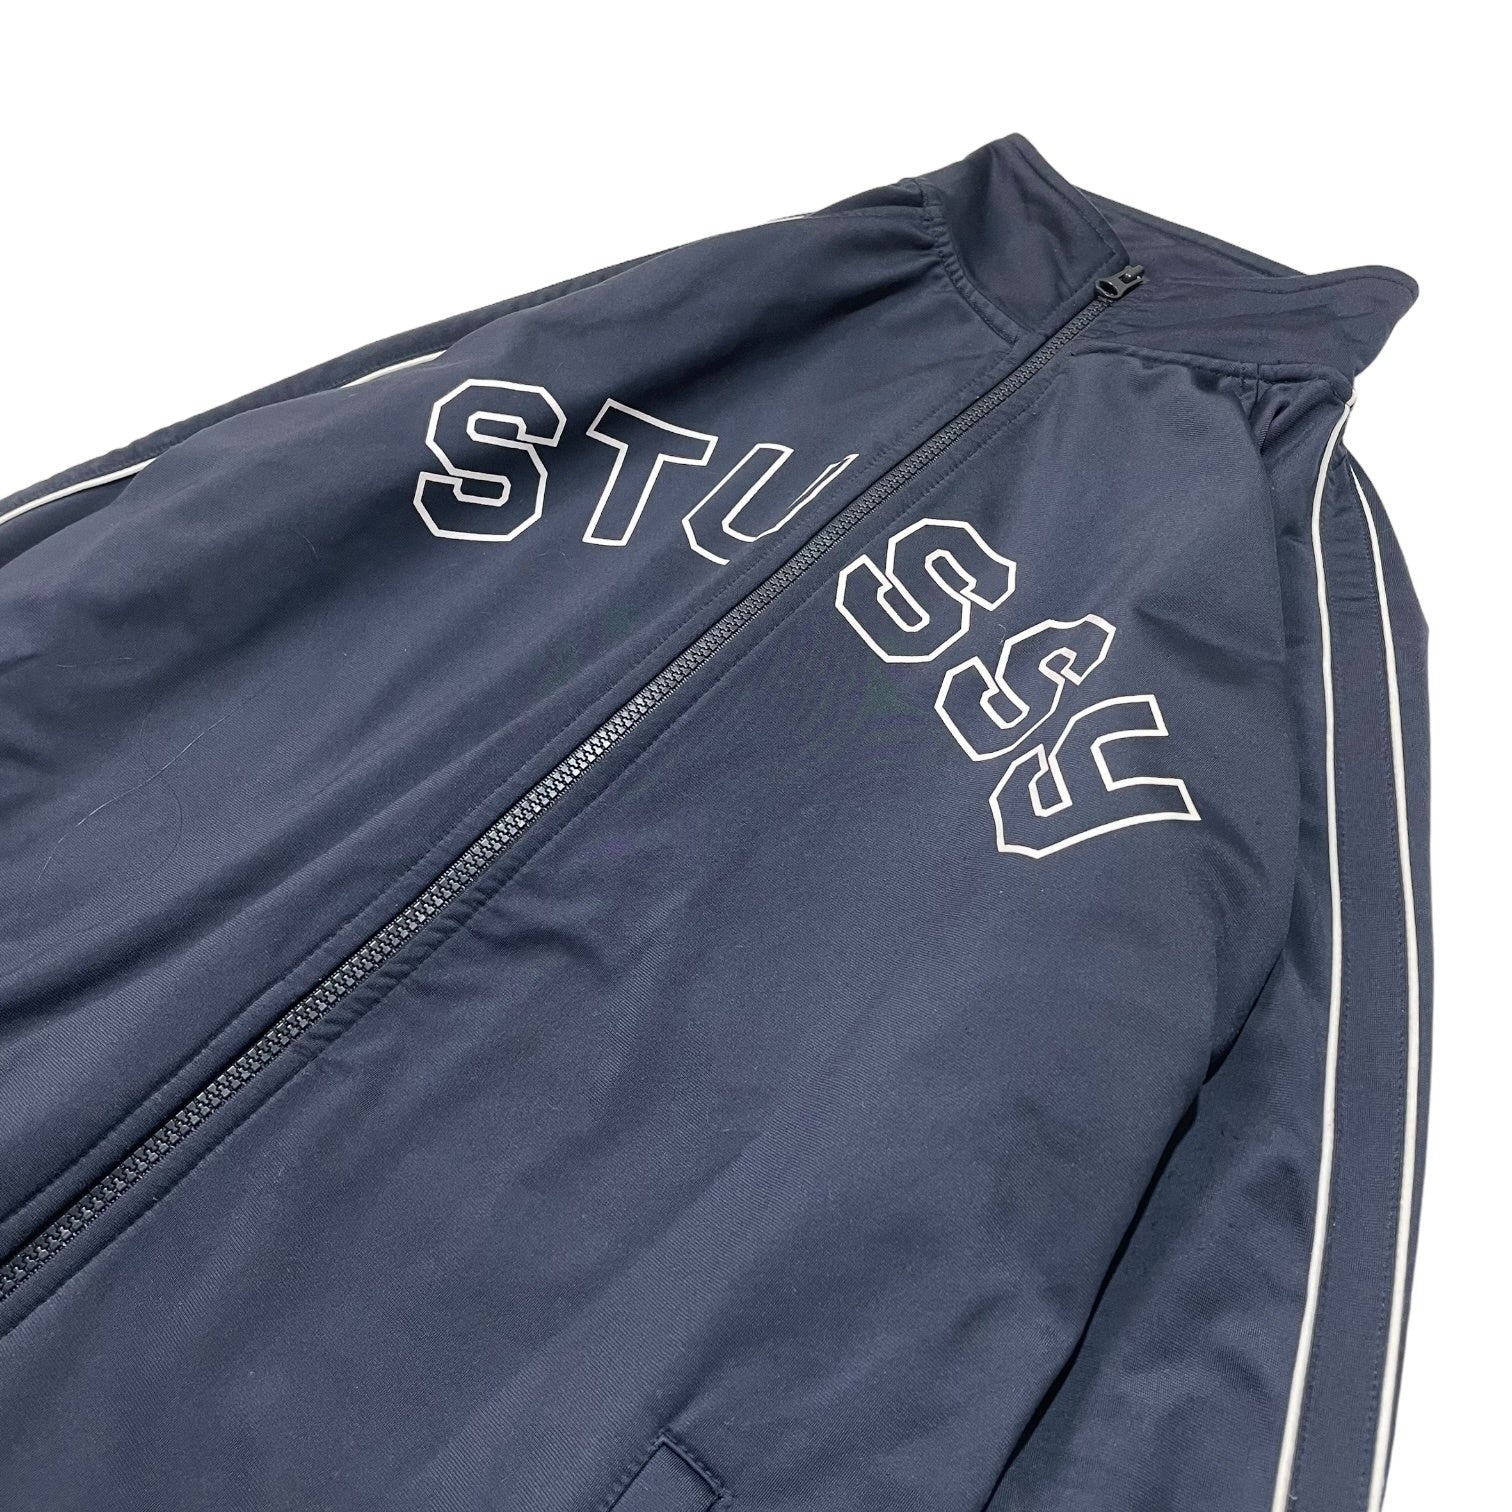 STUSSY(ステューシー) 90's~00's logo track jacket ロゴ トラックジャケット ジャージ SIZE M ネイビー  STUSSY JAPAN初期タグ OLD STUSSY